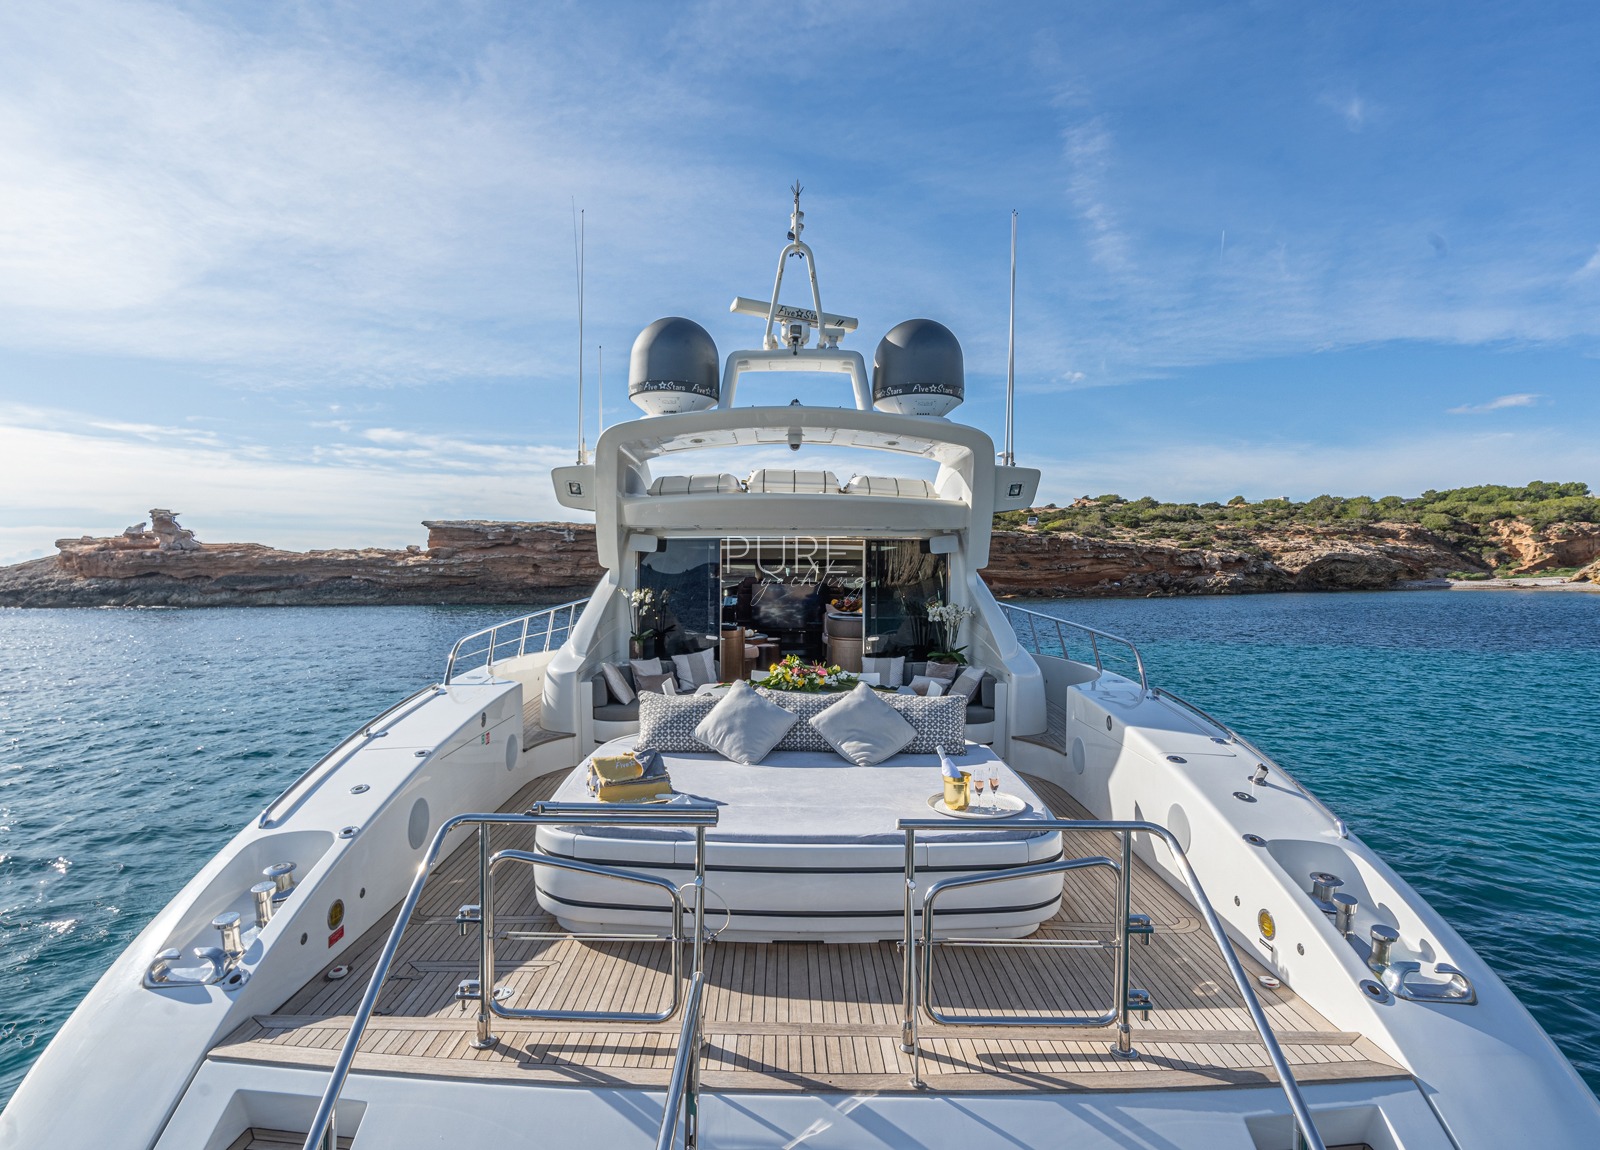 upperdeck sunbeds luxury yacht mangusta 92 five stars balearic islands